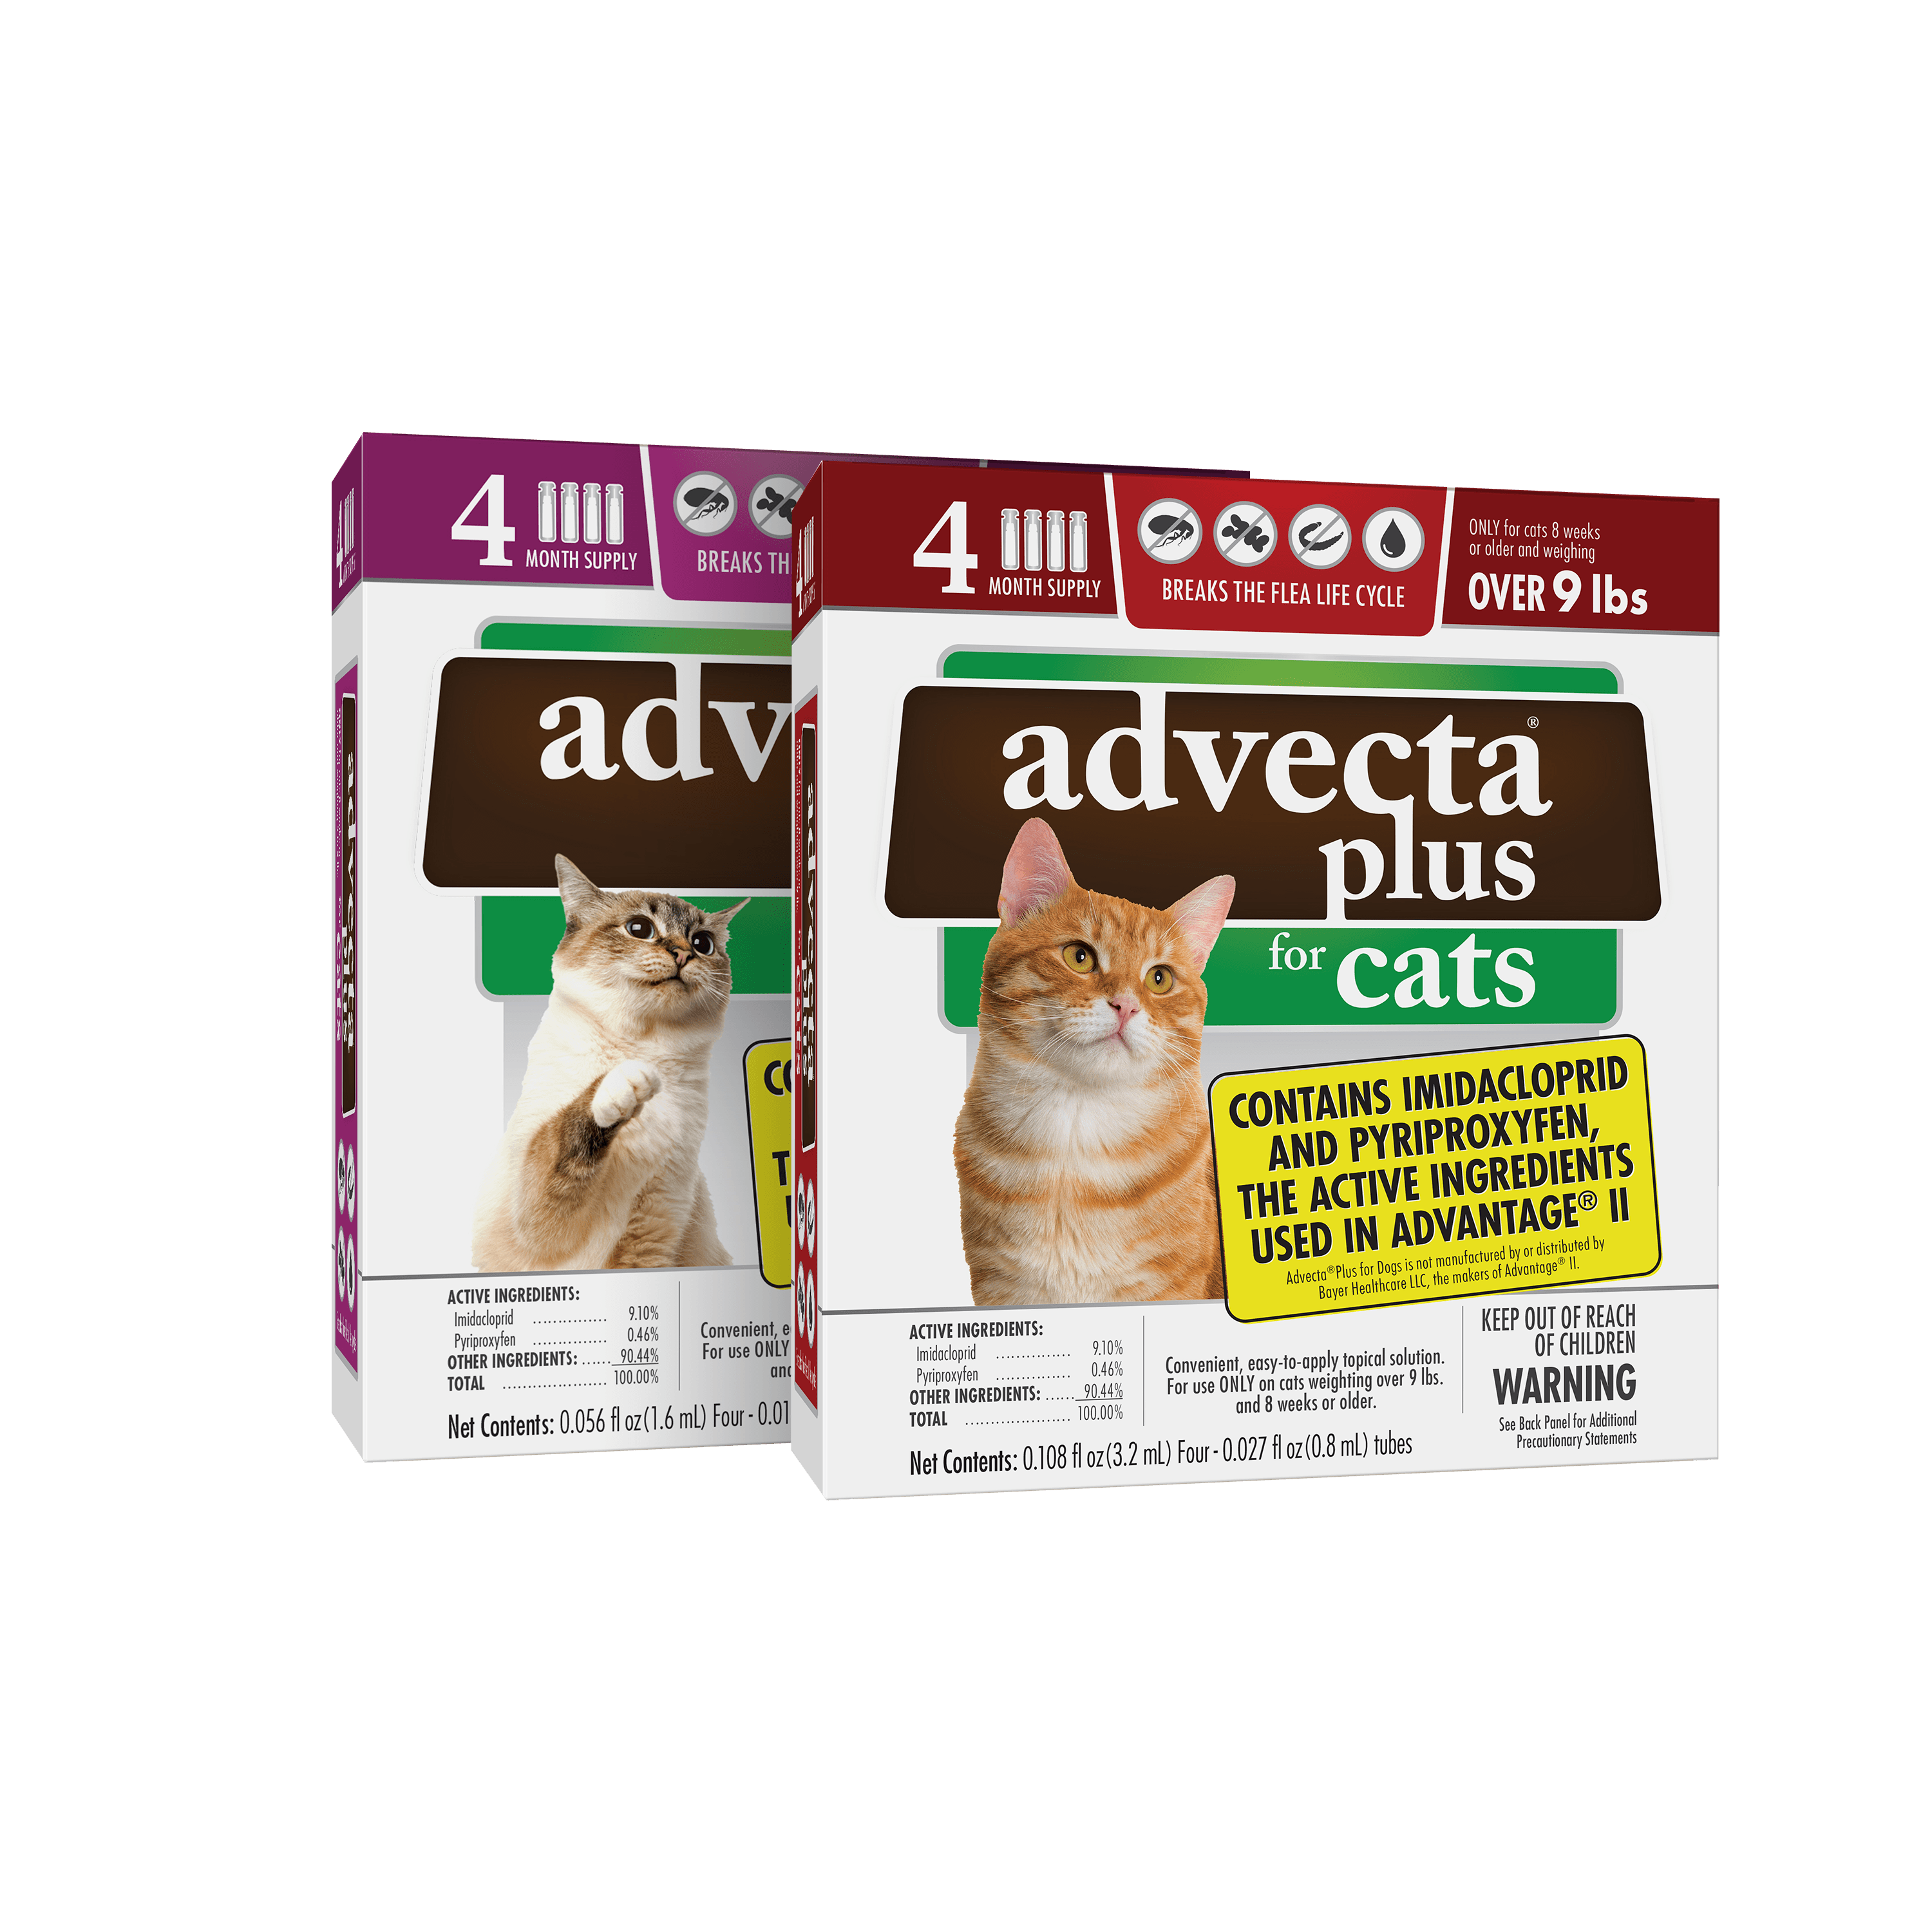 Advecta Plus Flea Protection for Cats Advecta